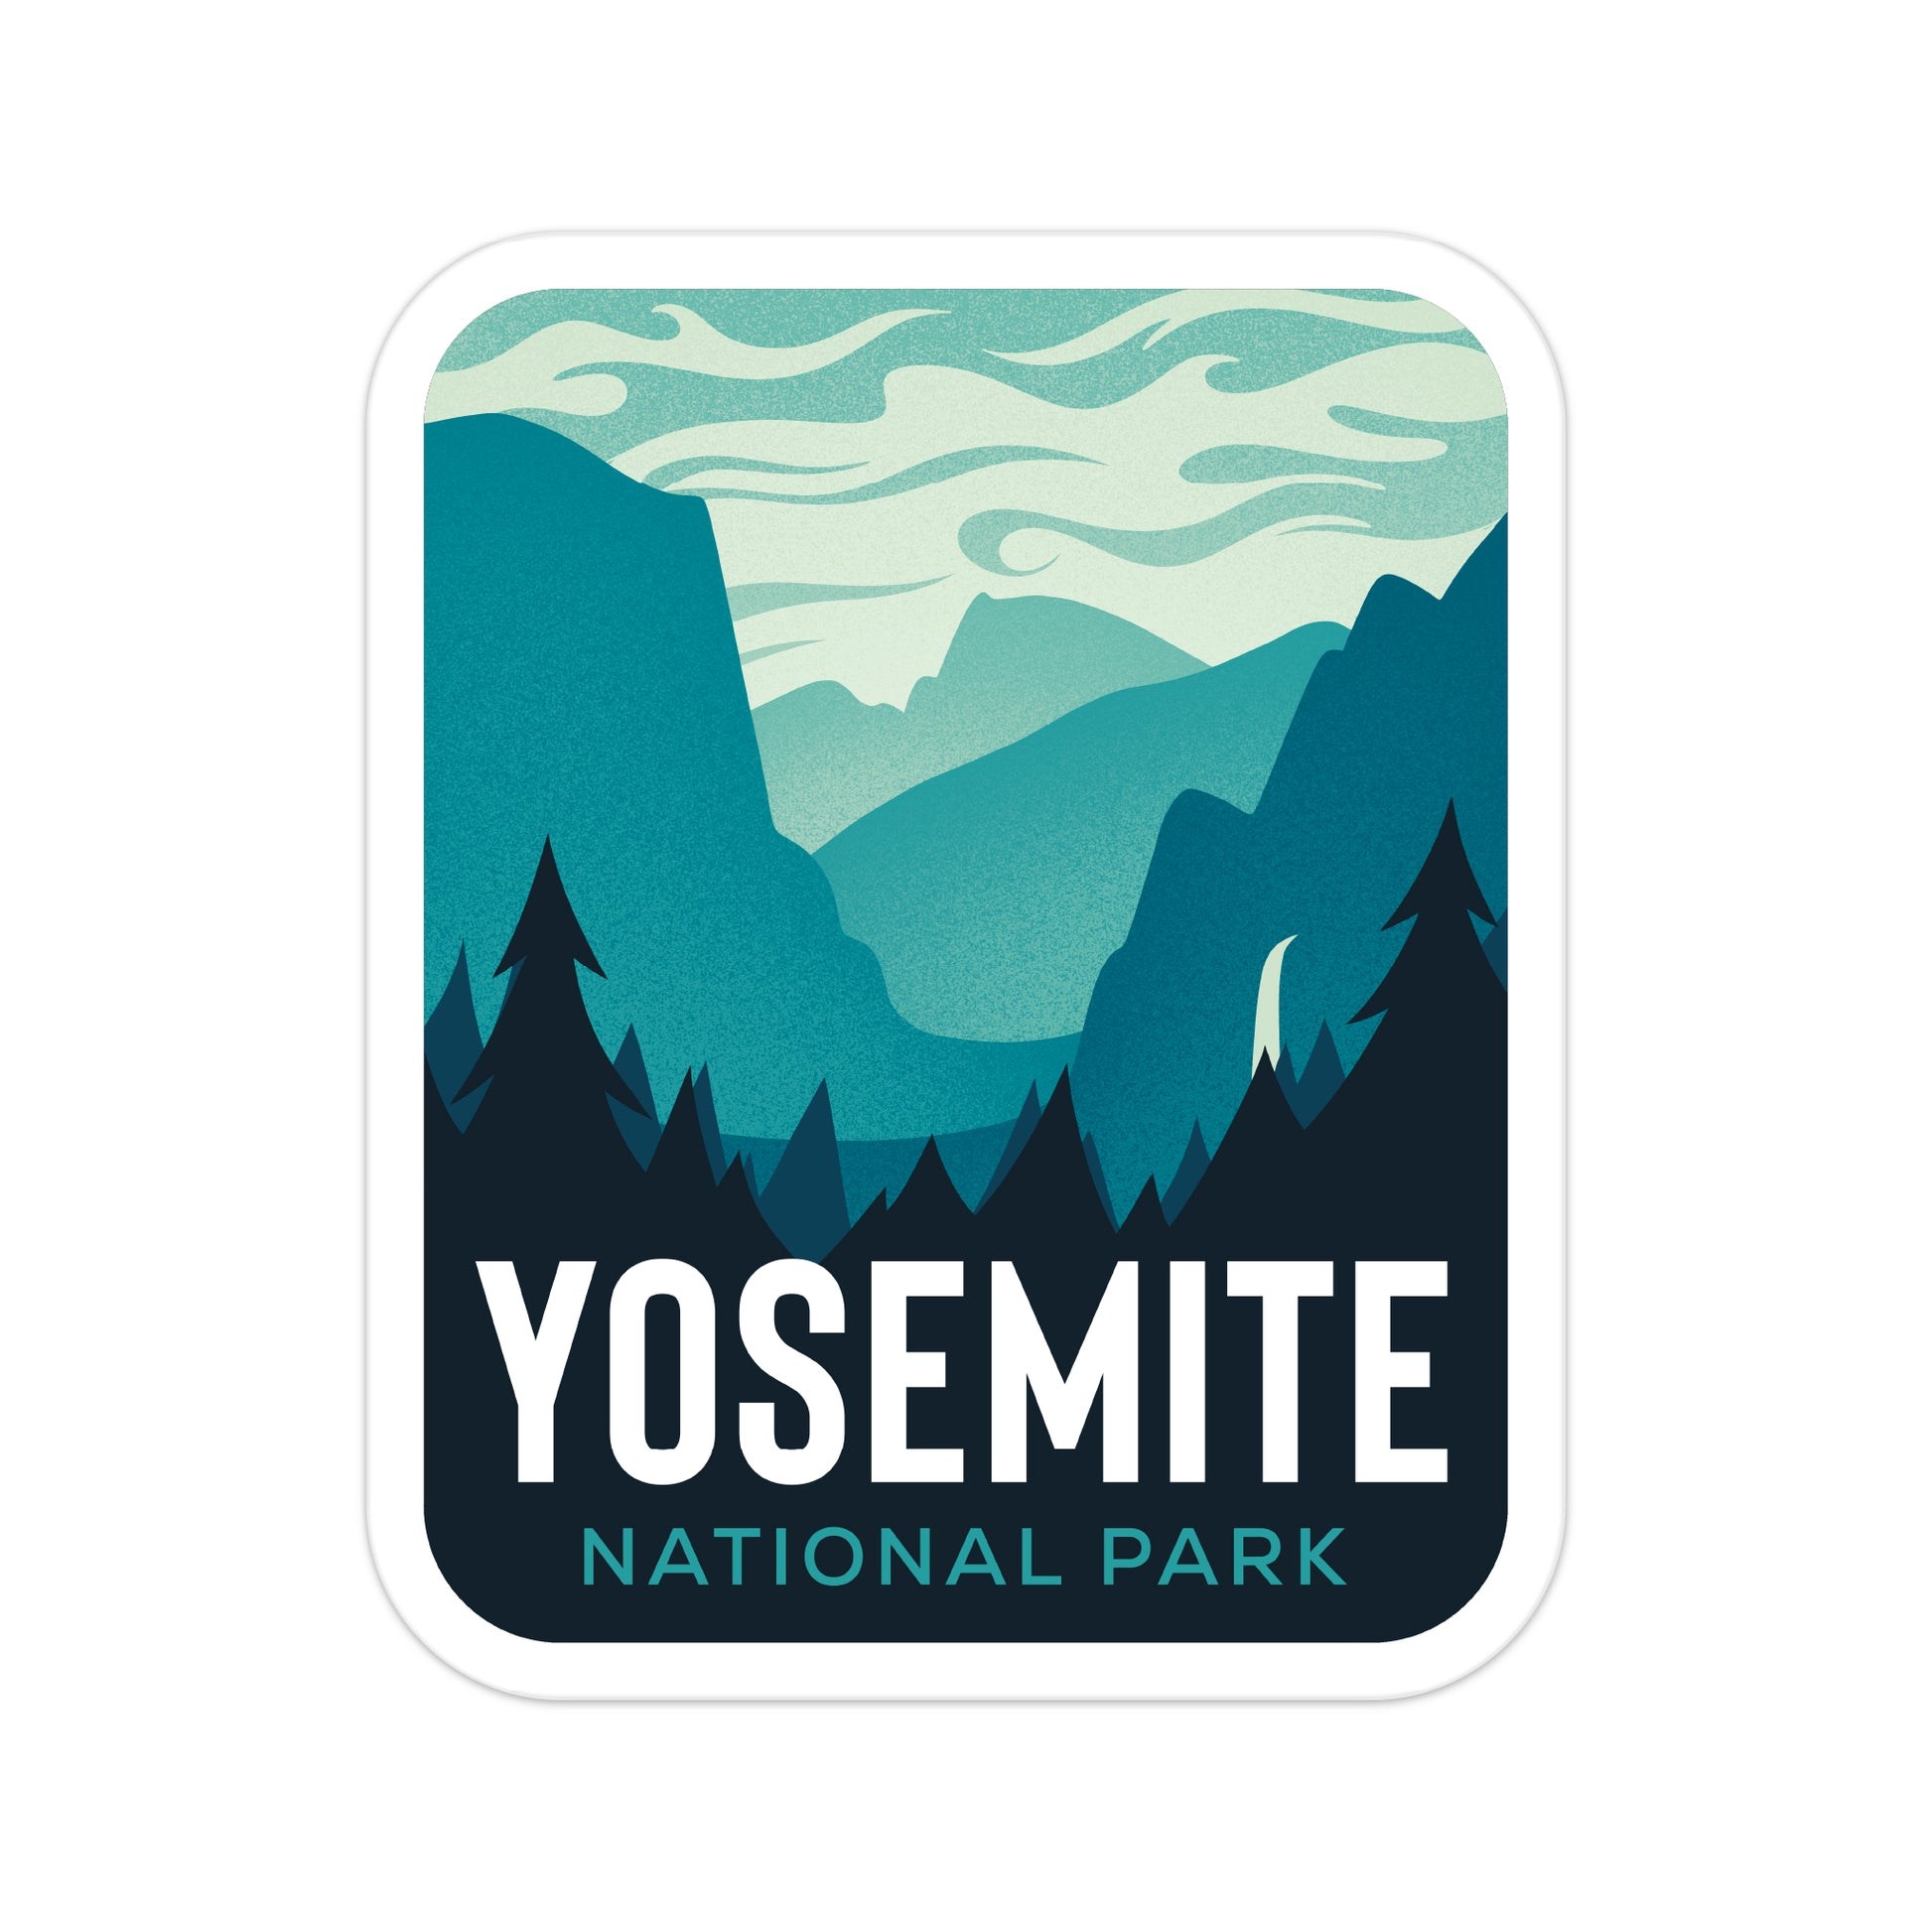 A sticker of Yosemite National Park